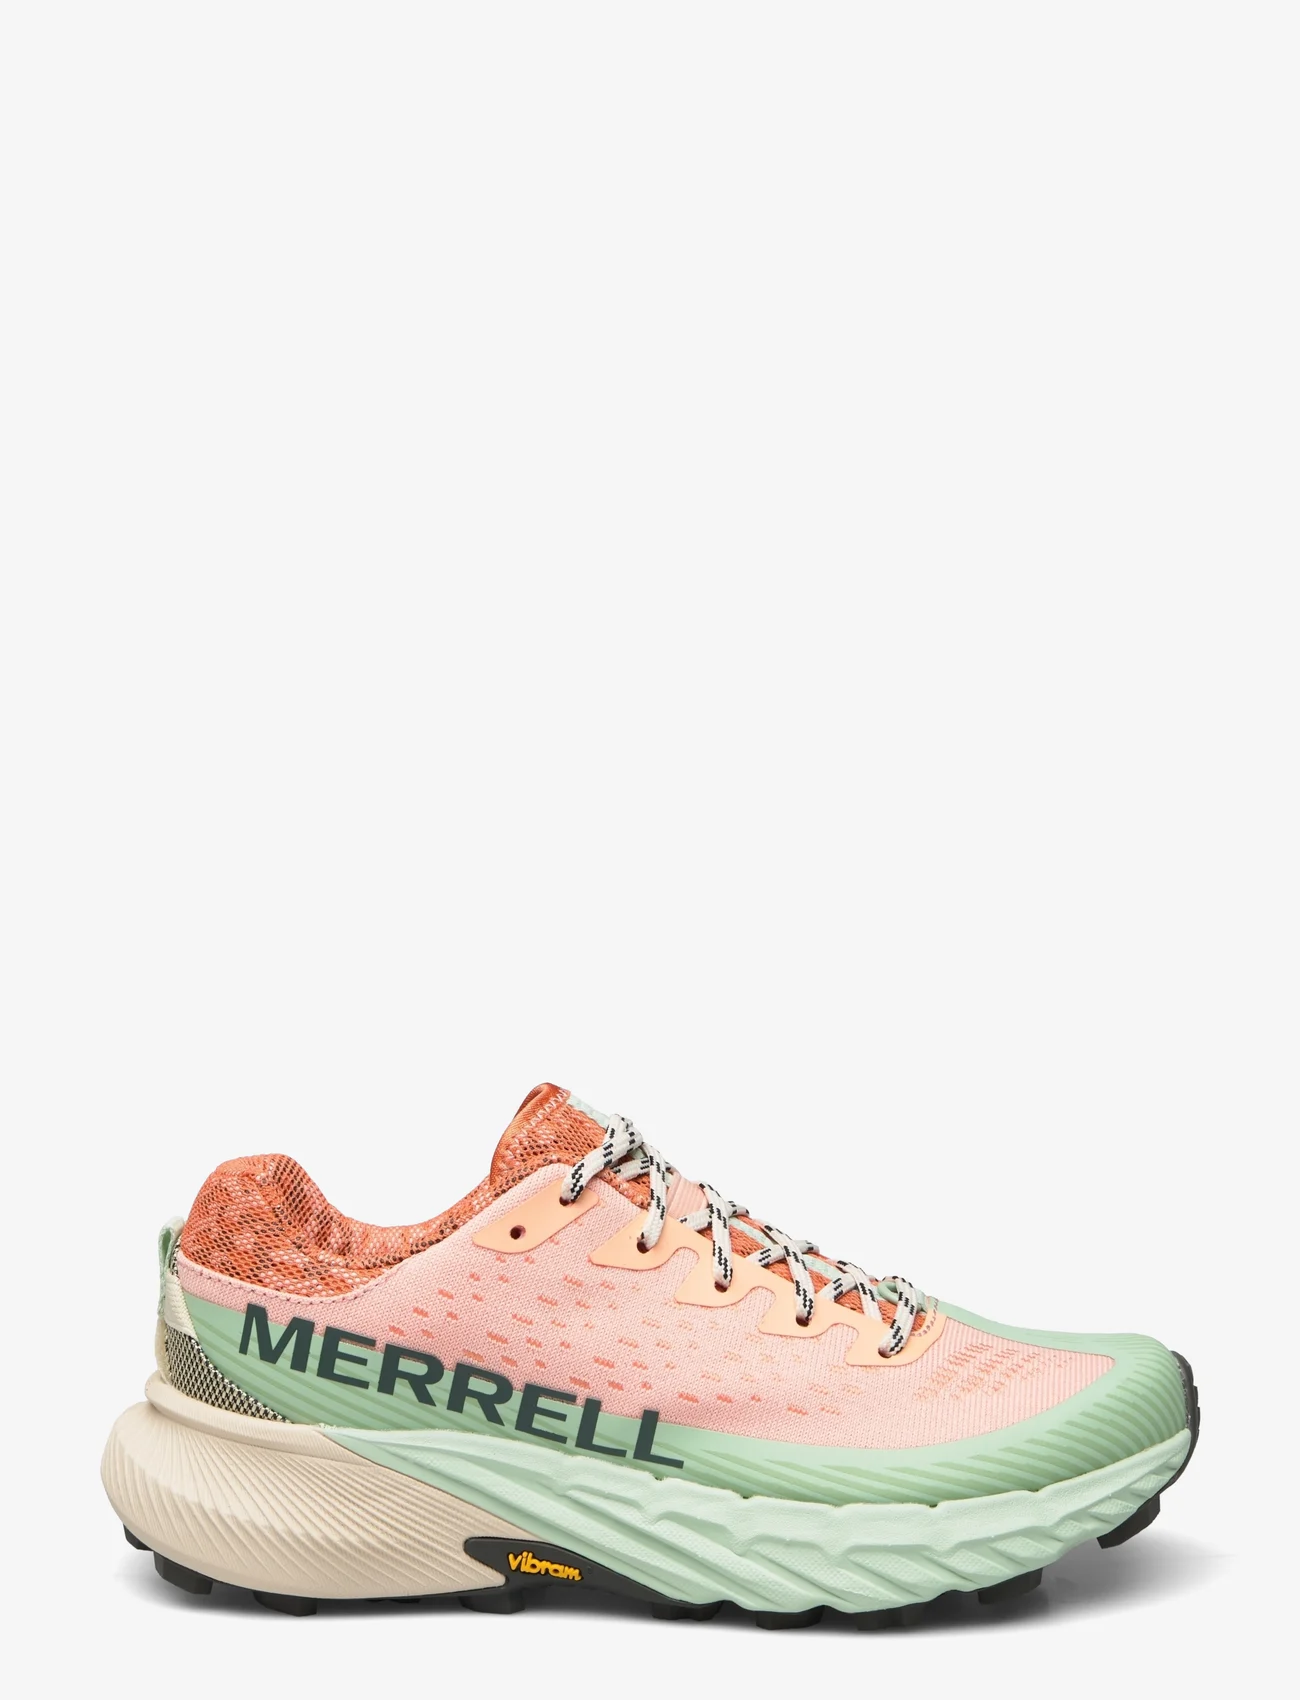 Merrell - Women's Agility Peak 5 - Peach/Spra - running shoes - peach/spray - 1